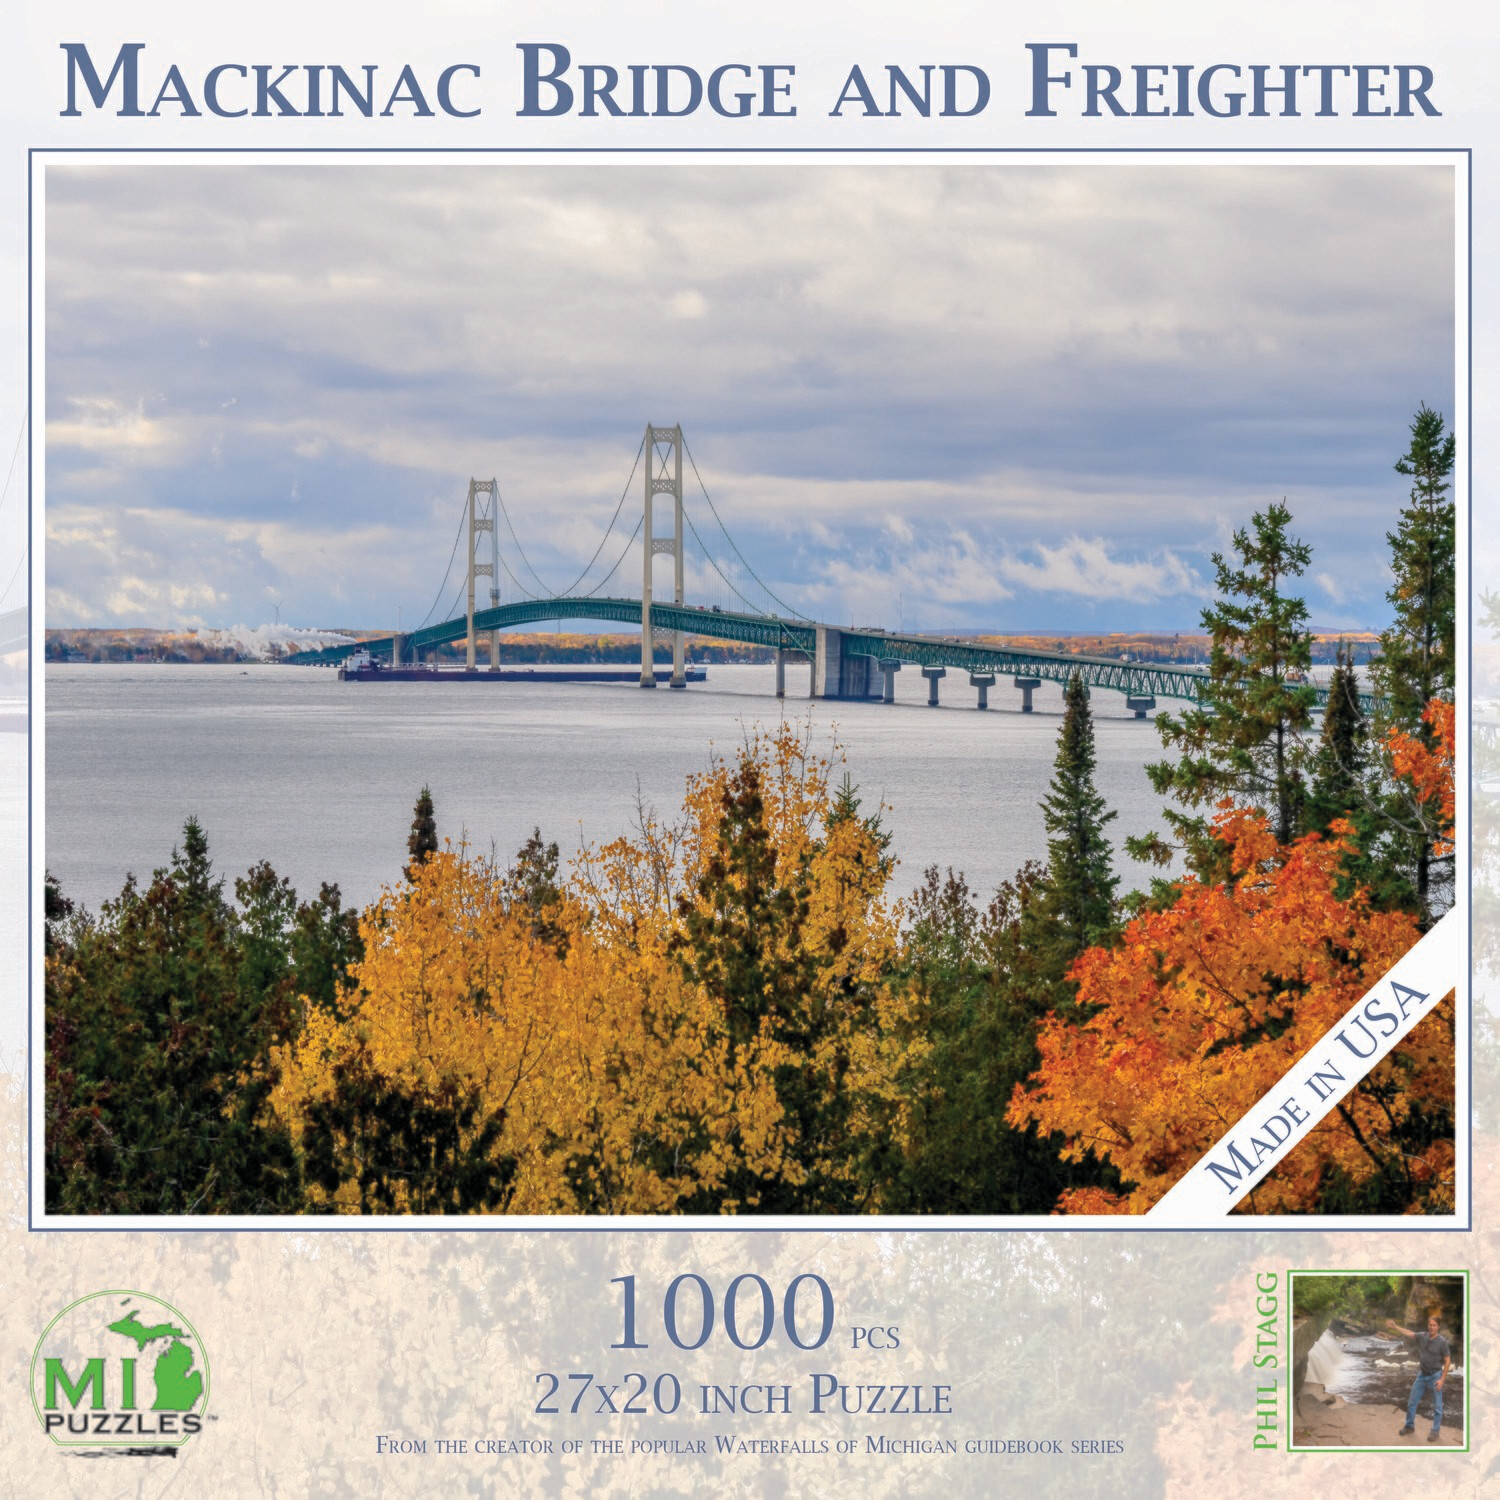 MACKINAC BRIDGE AND FREIGHTER